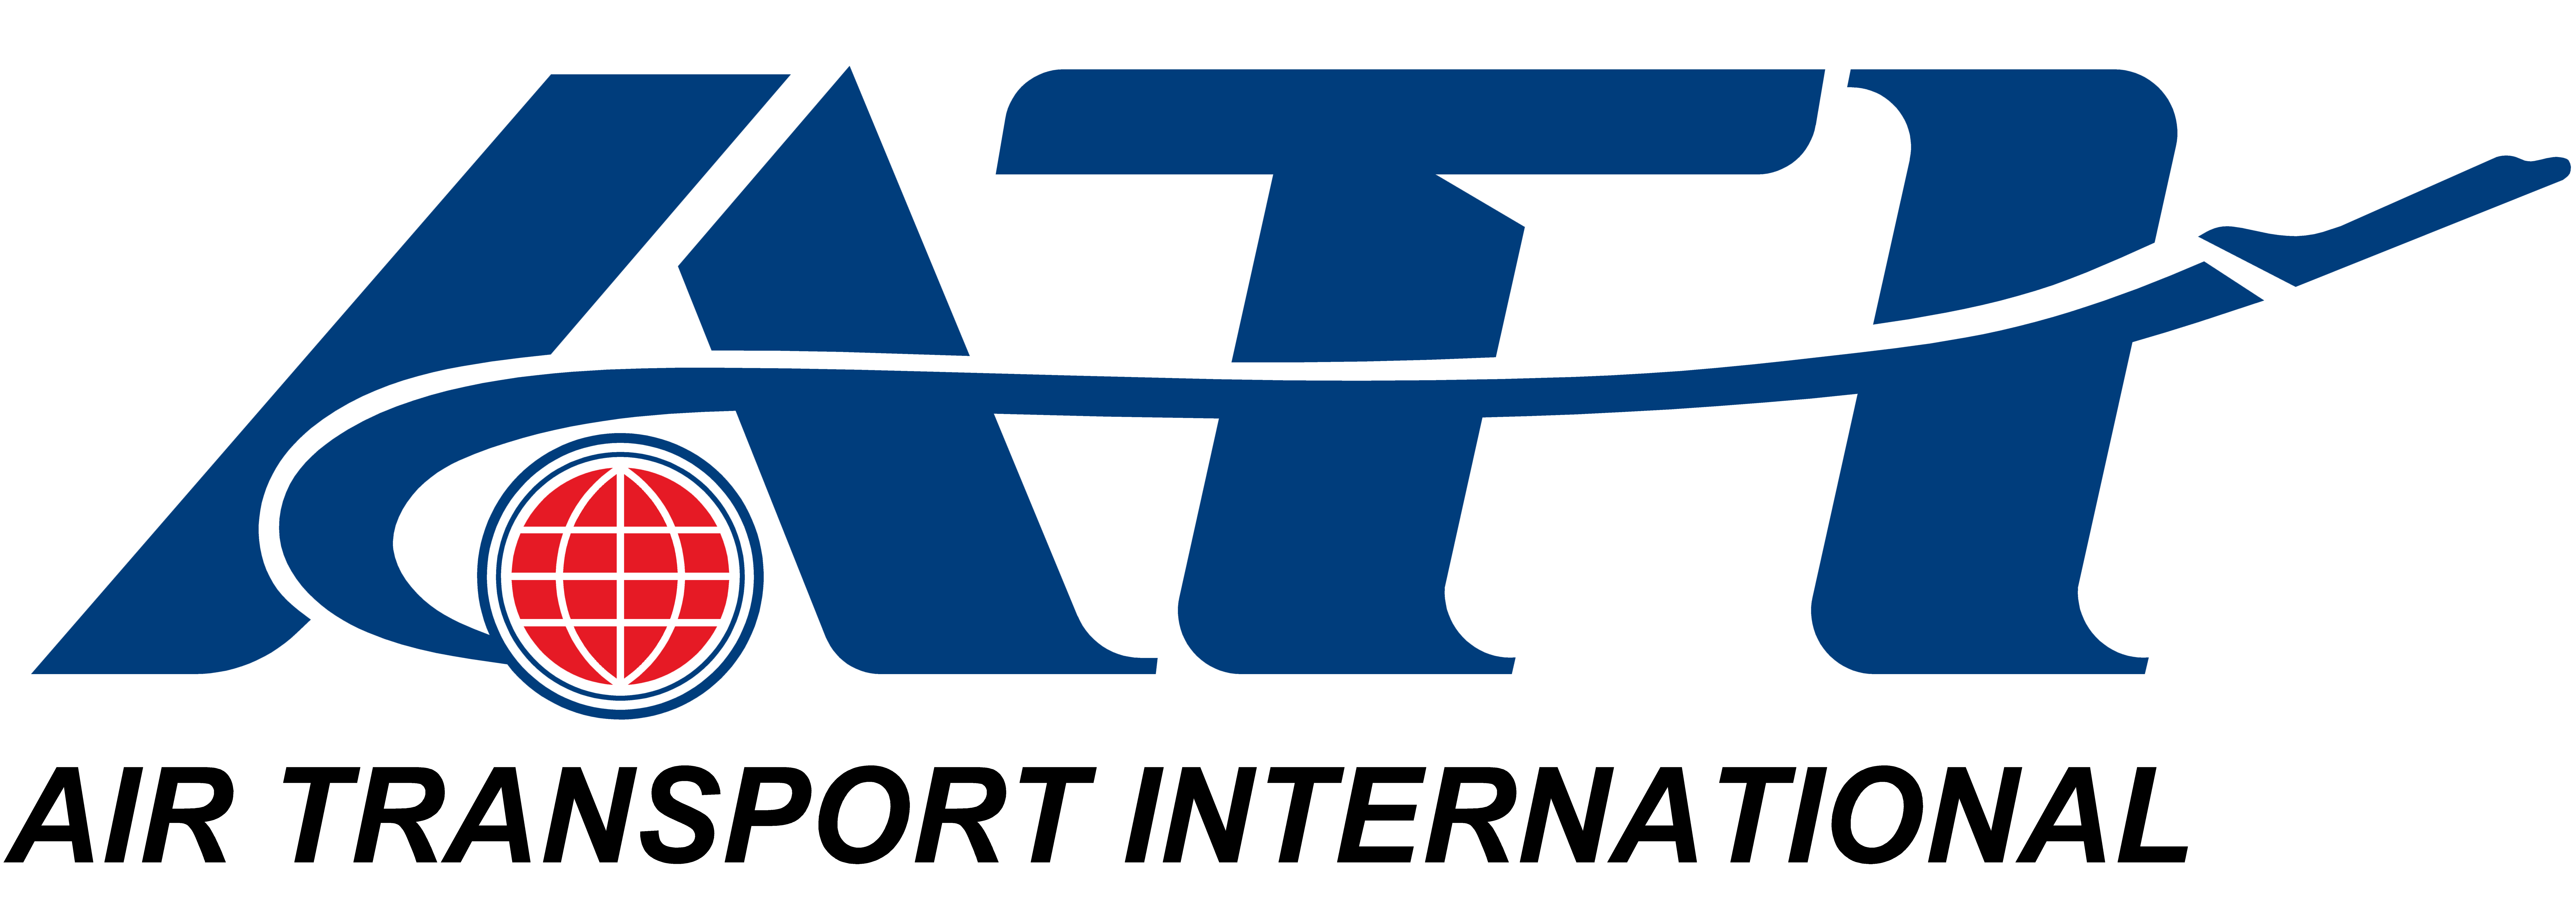 Tair Logo - Air Transport International